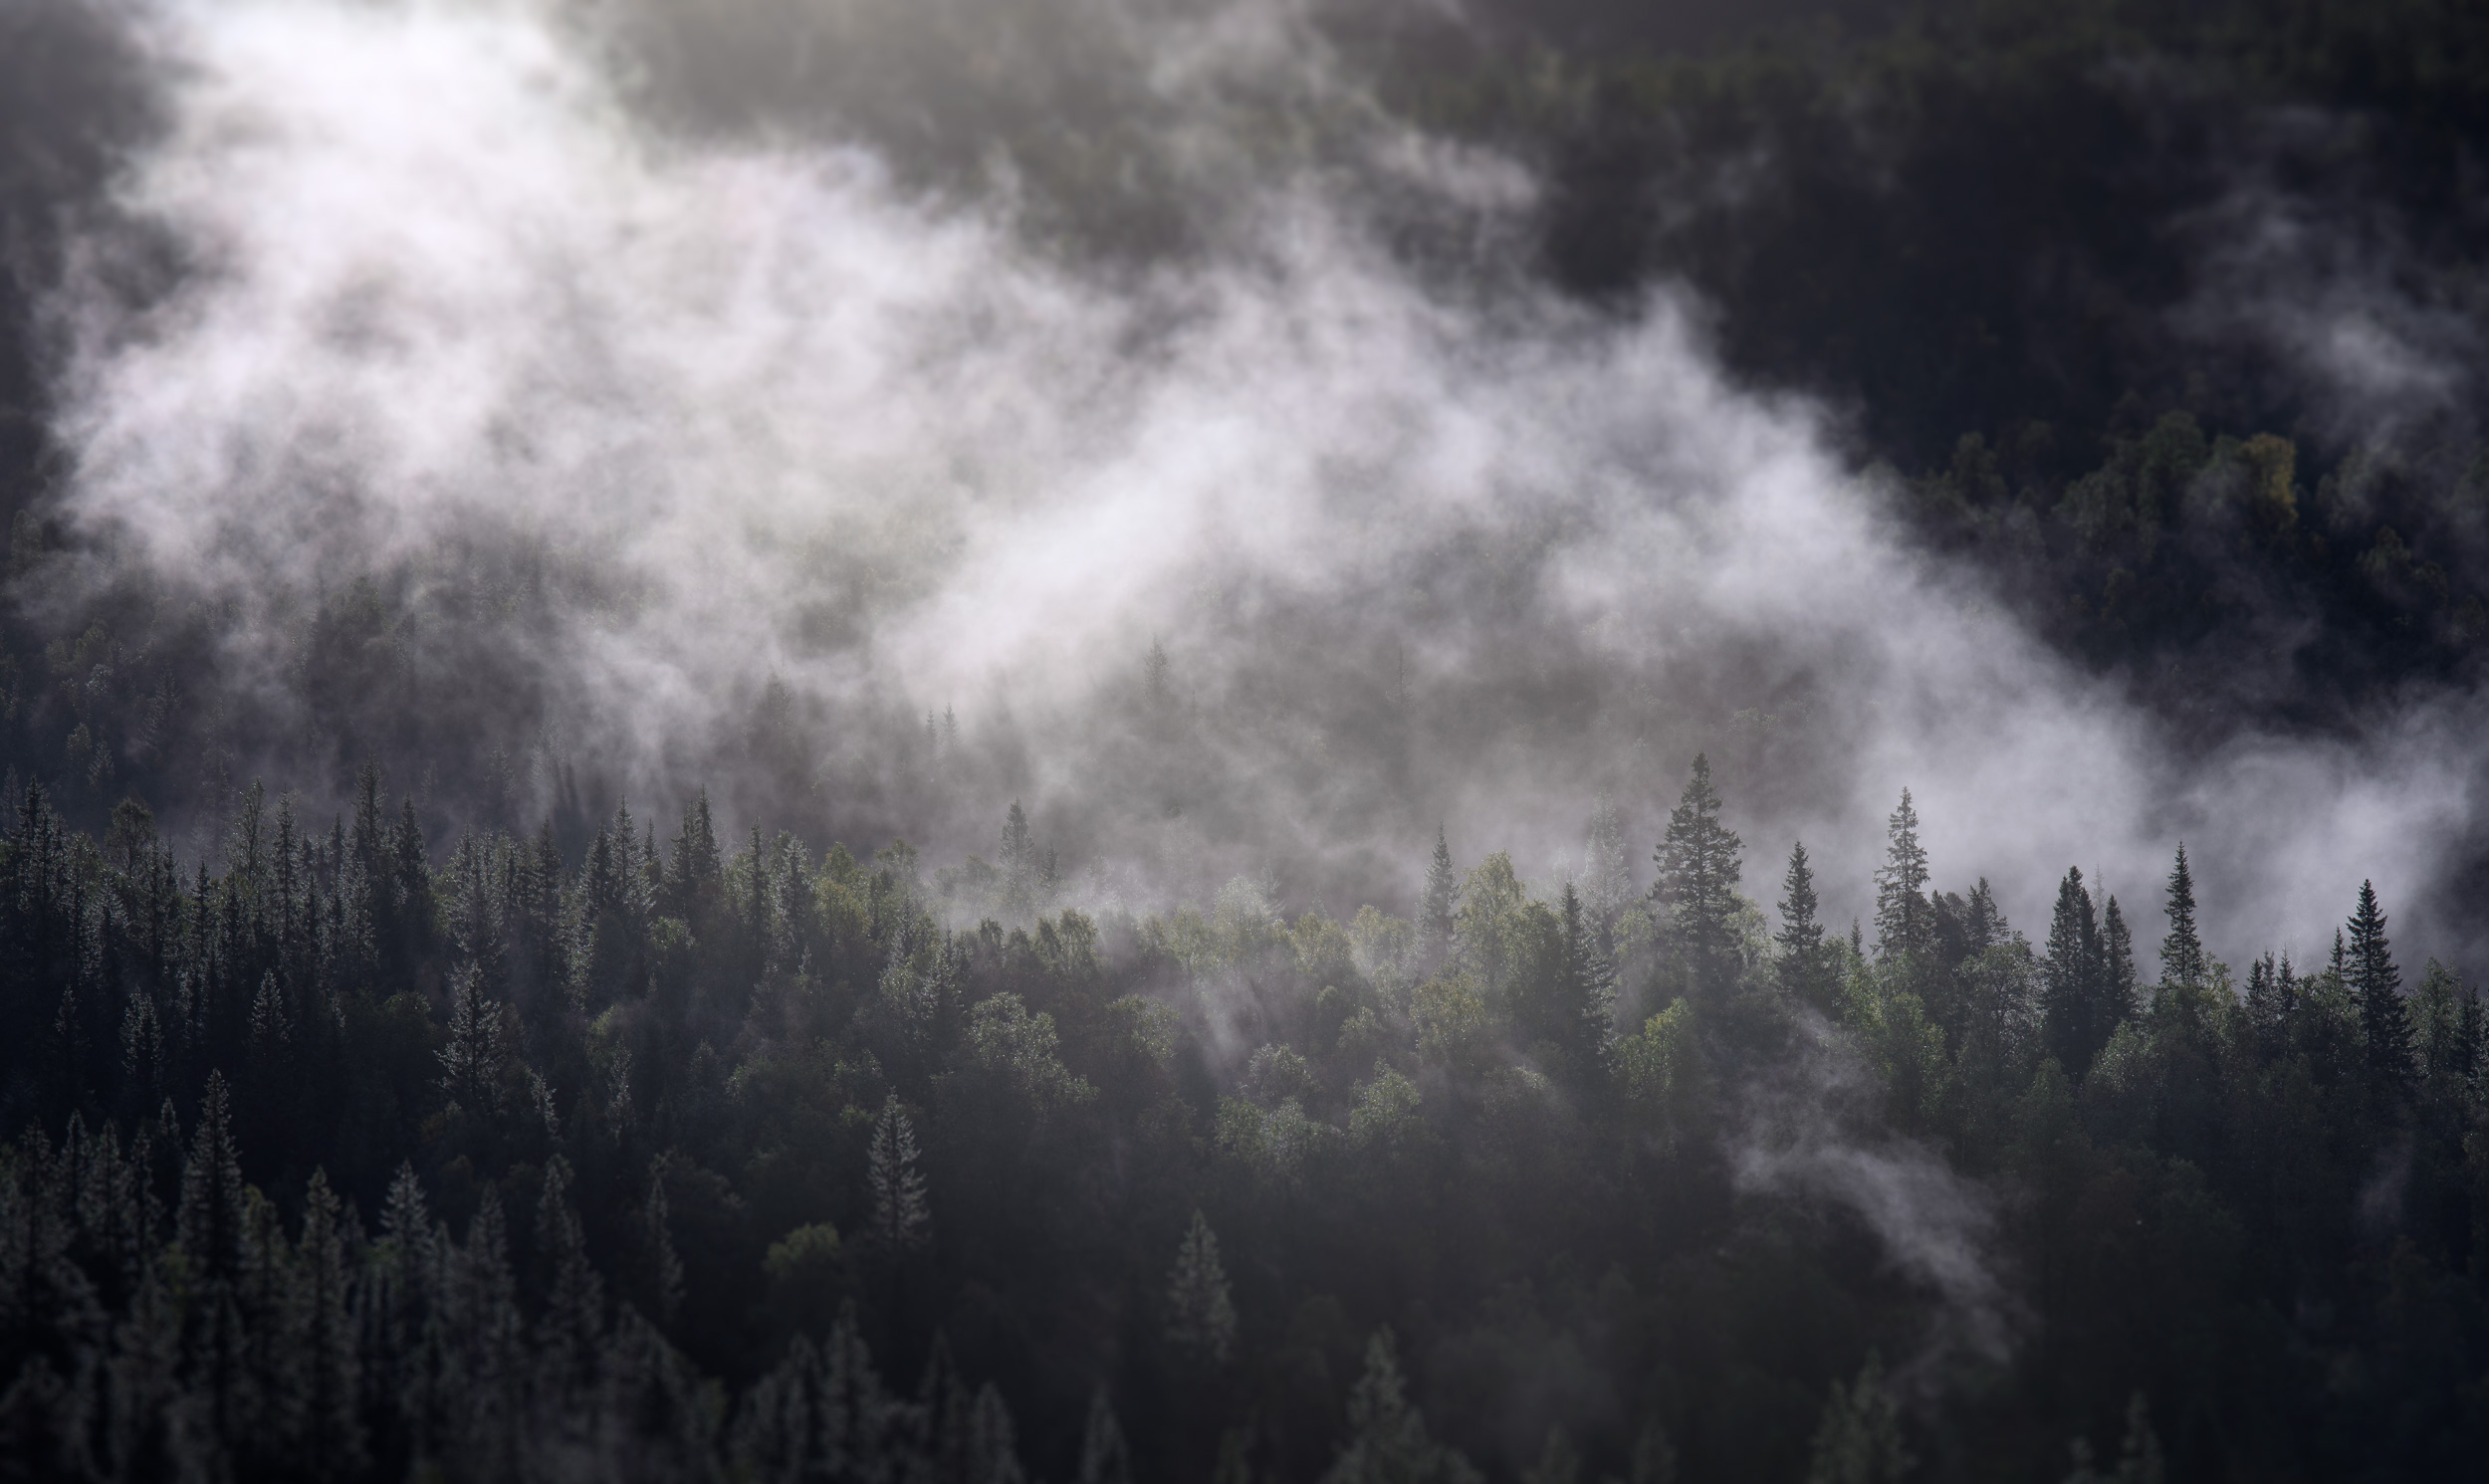 Skog i dimma